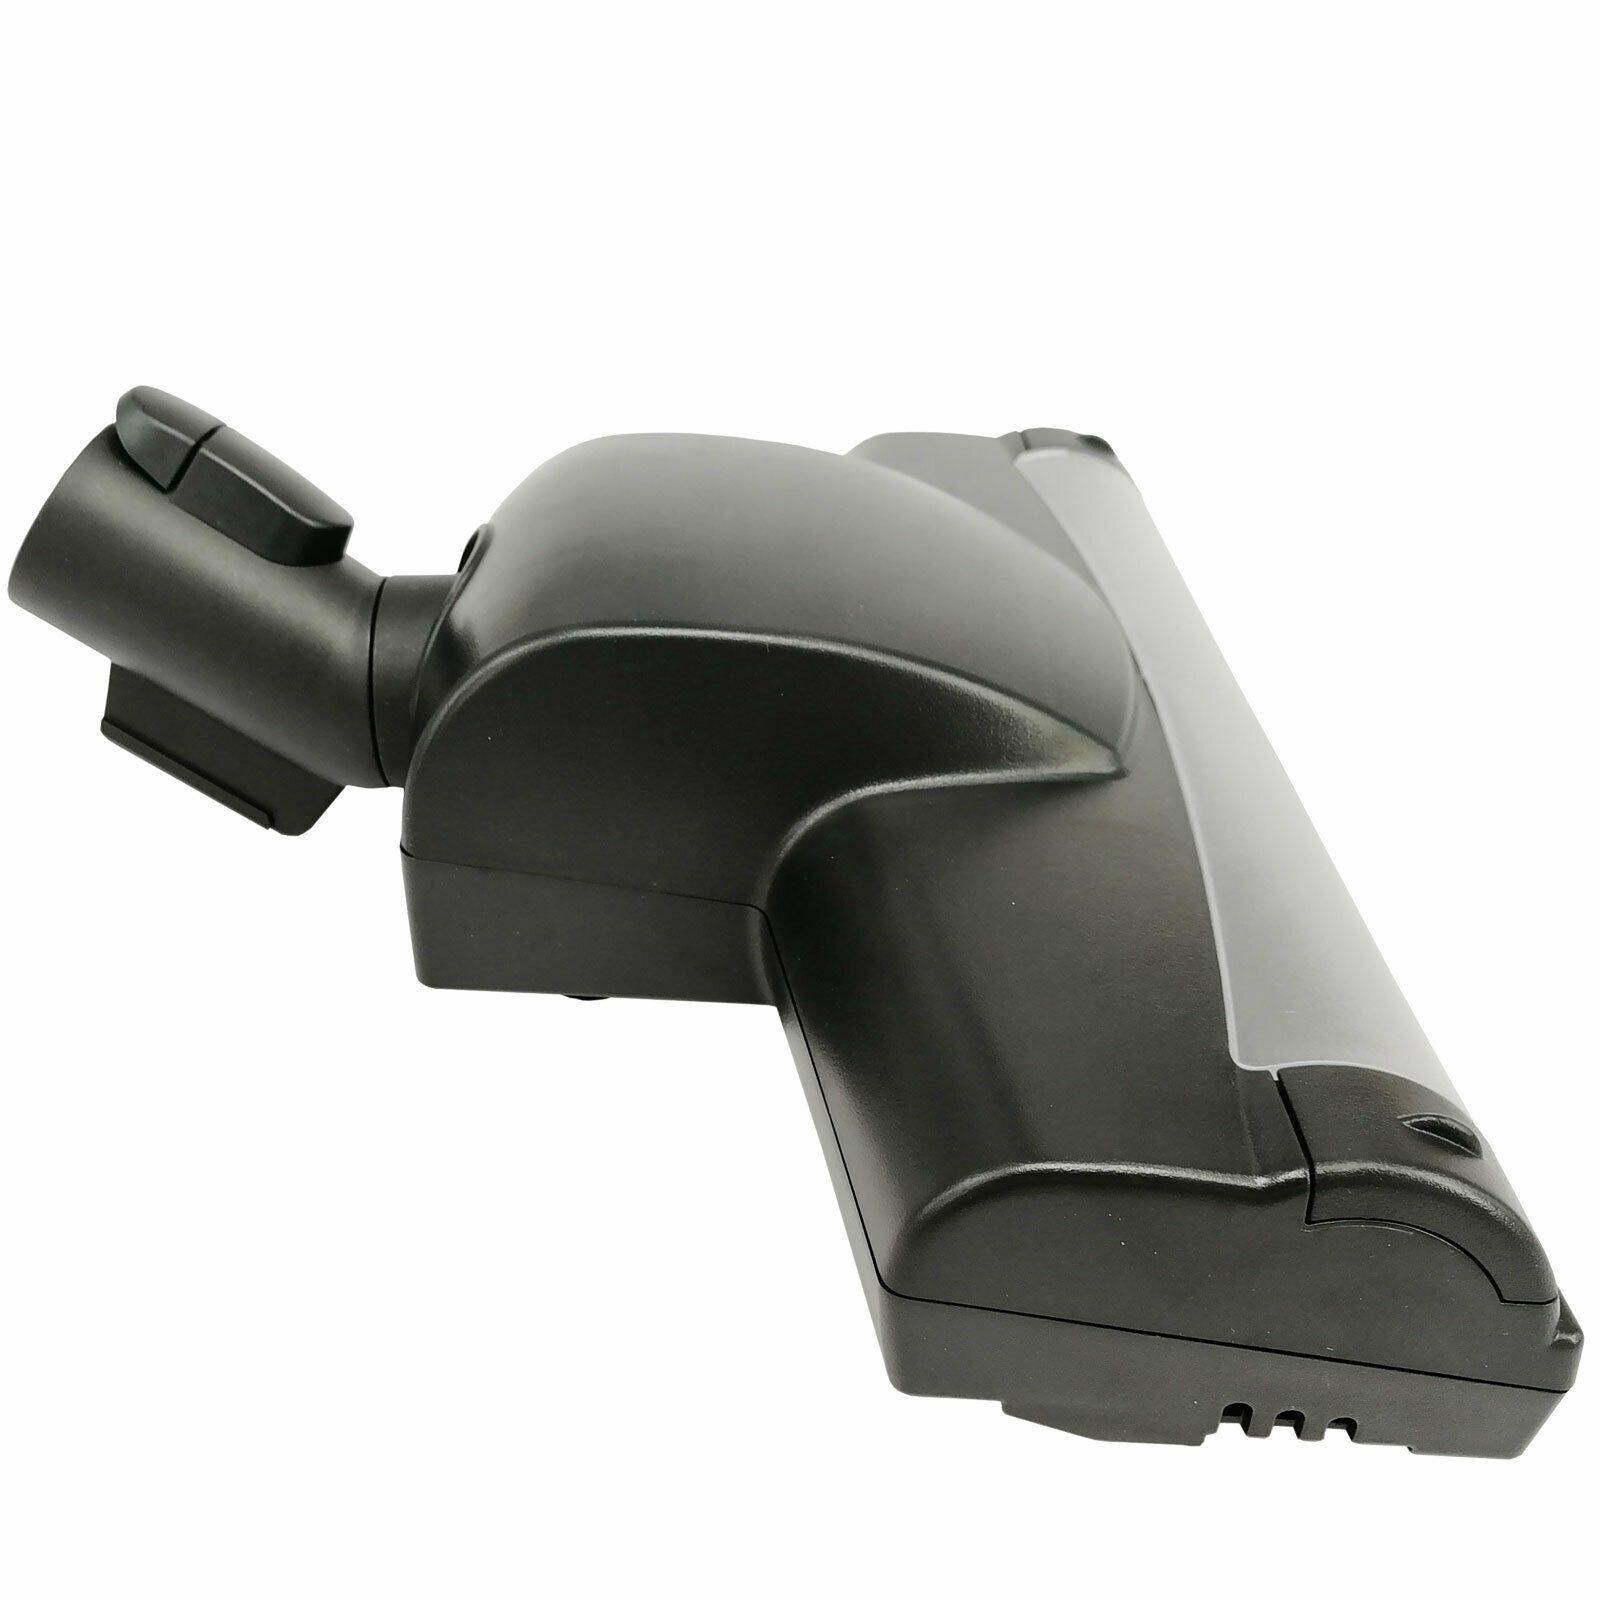 Vacuum Floor Tool Turbo Brush Head For Miele S5210 S5211 S5211 S5220 S5221 S5260 Sparesbarn